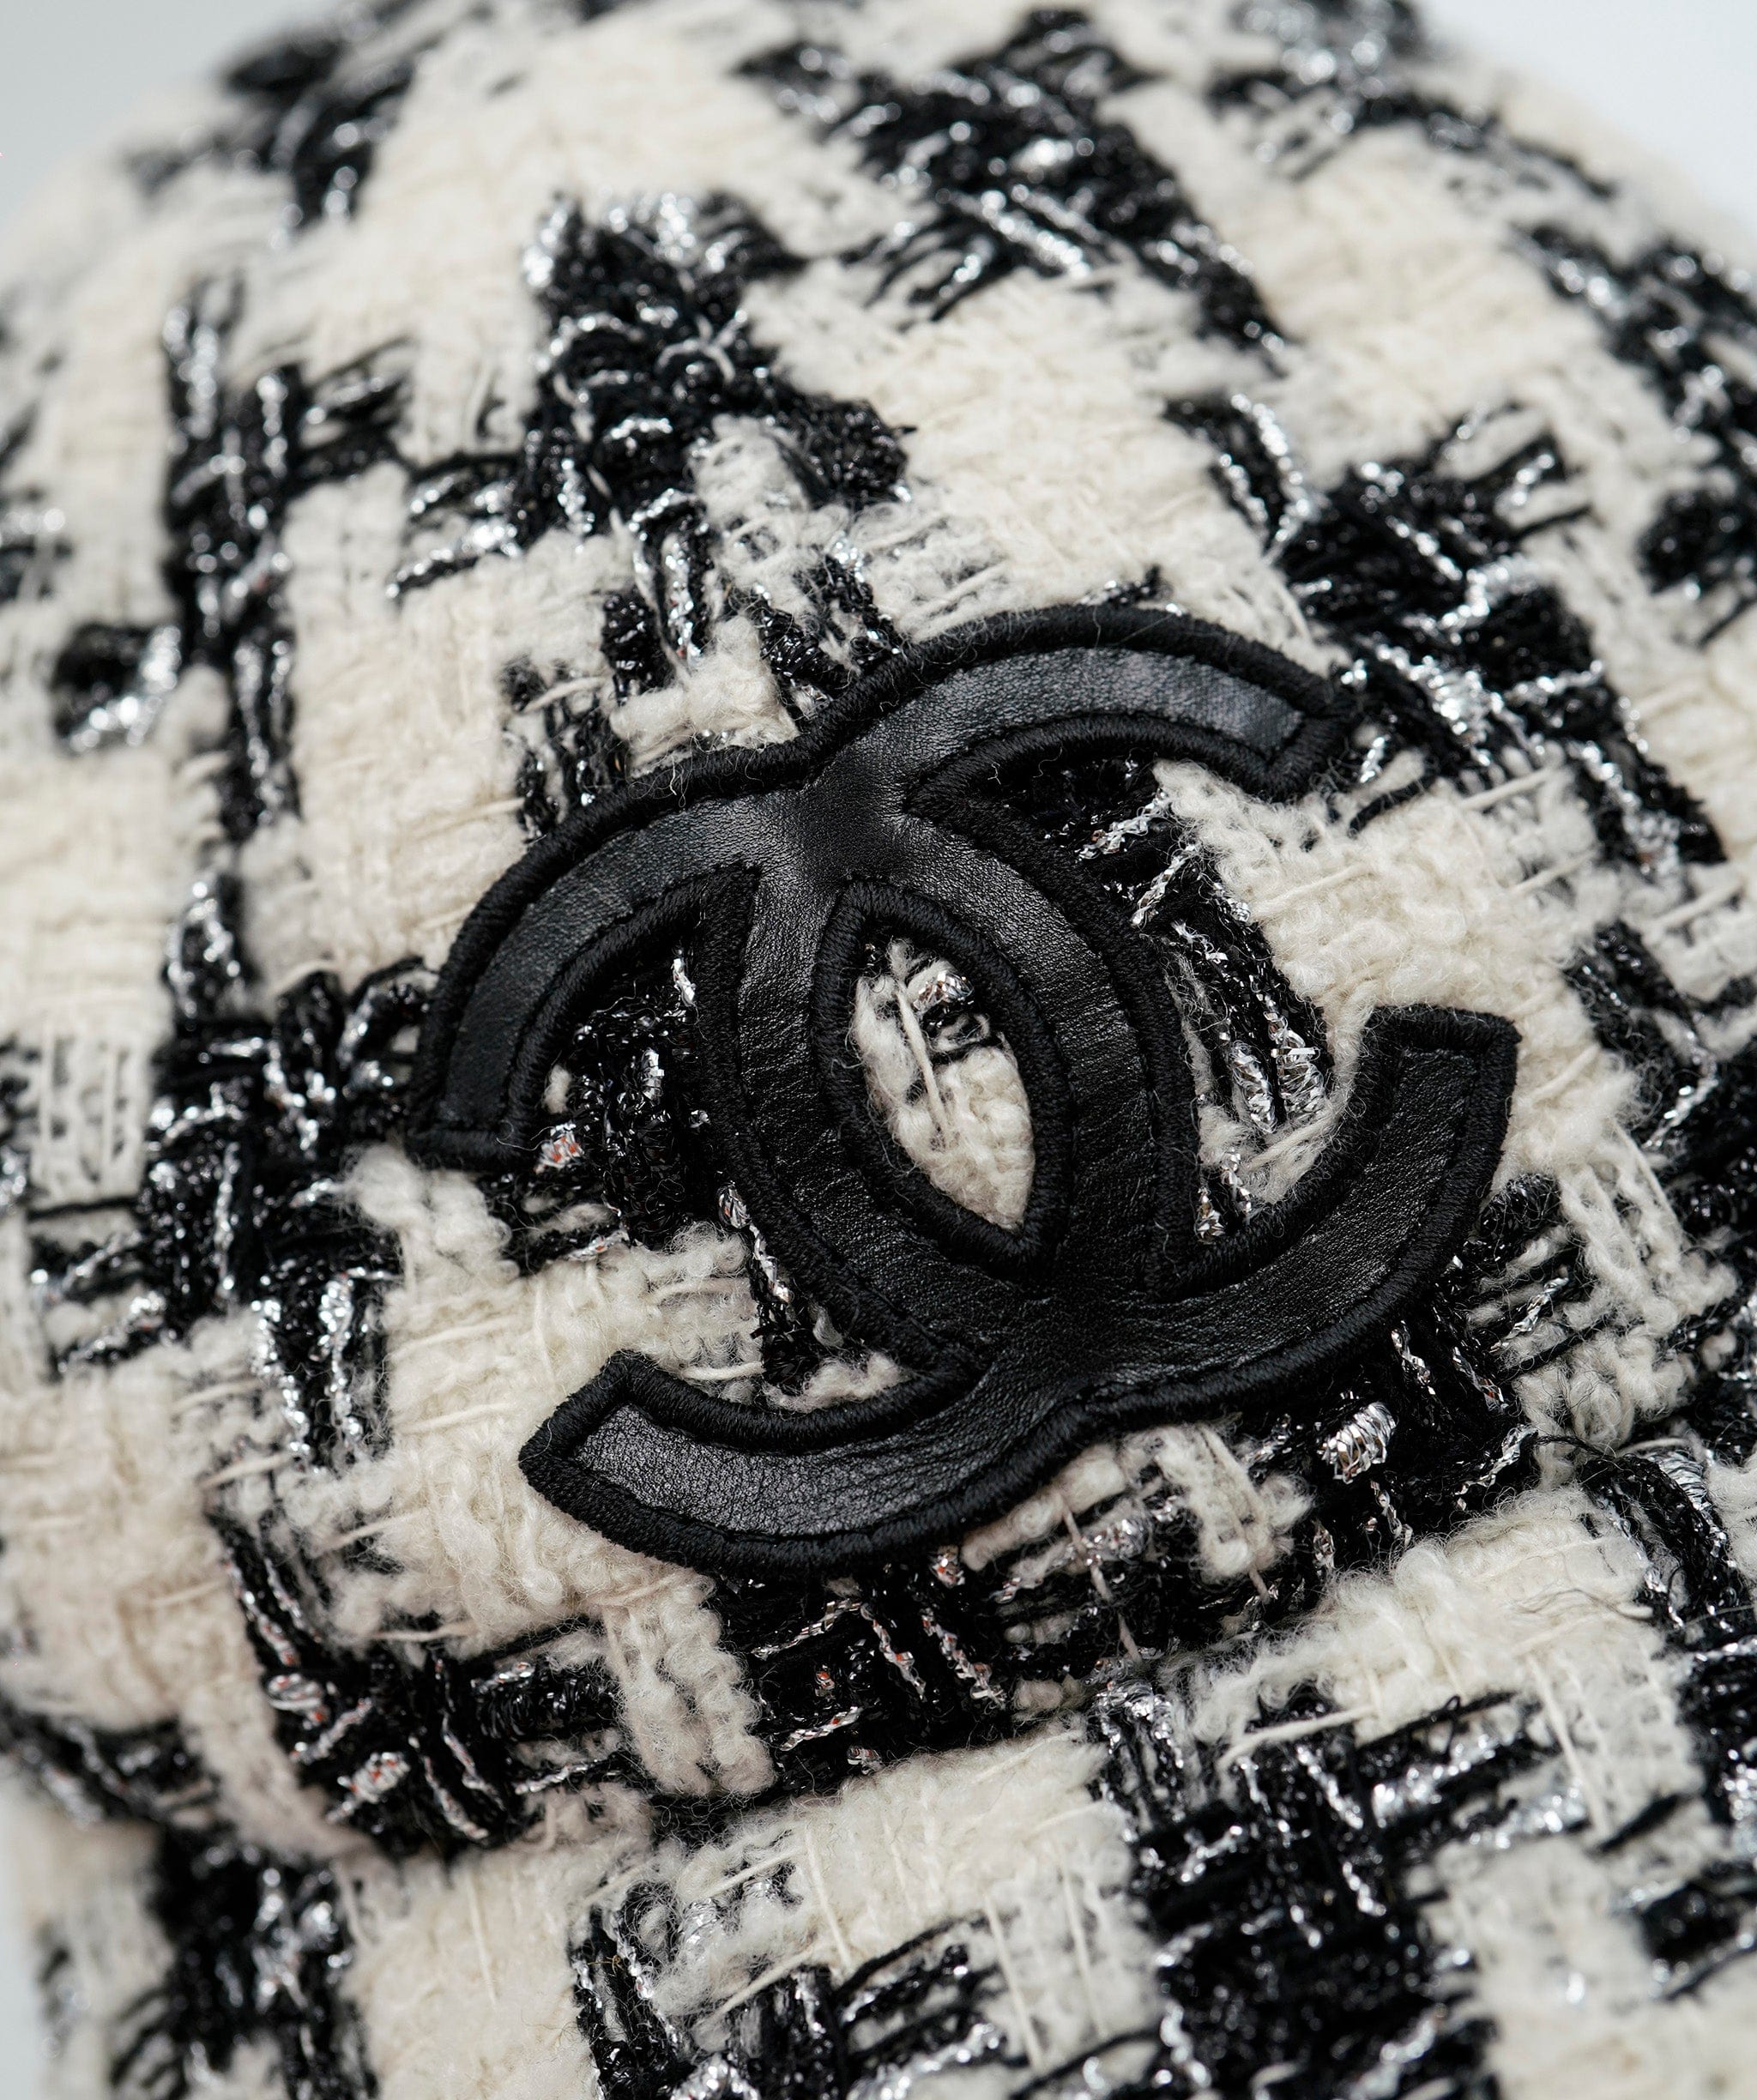 Chanel Chanel B/W tweed cap with CC logo, Size S, full set - AEC1066